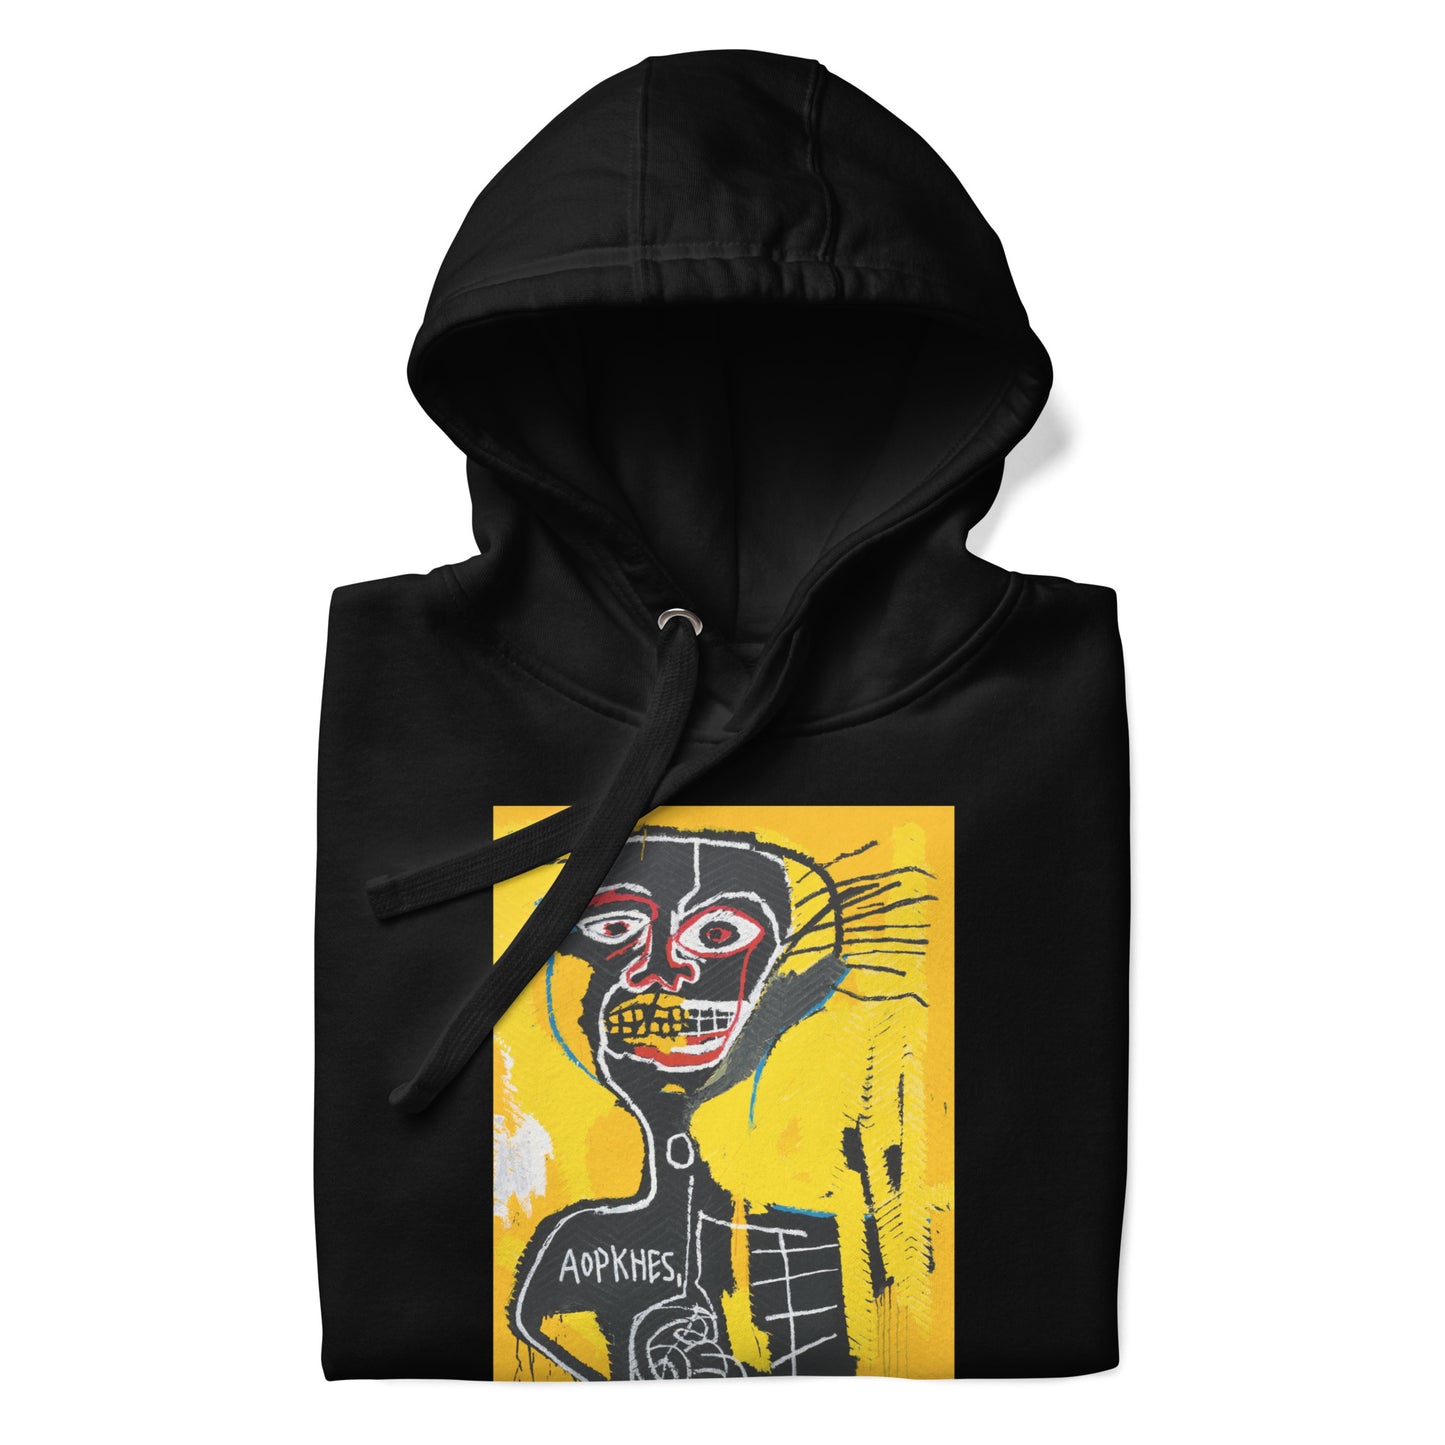 Jean-Michel Basquiat "Cabeza" Artwork Printed Premium Streetwear Sweatshirt Hoodie Black